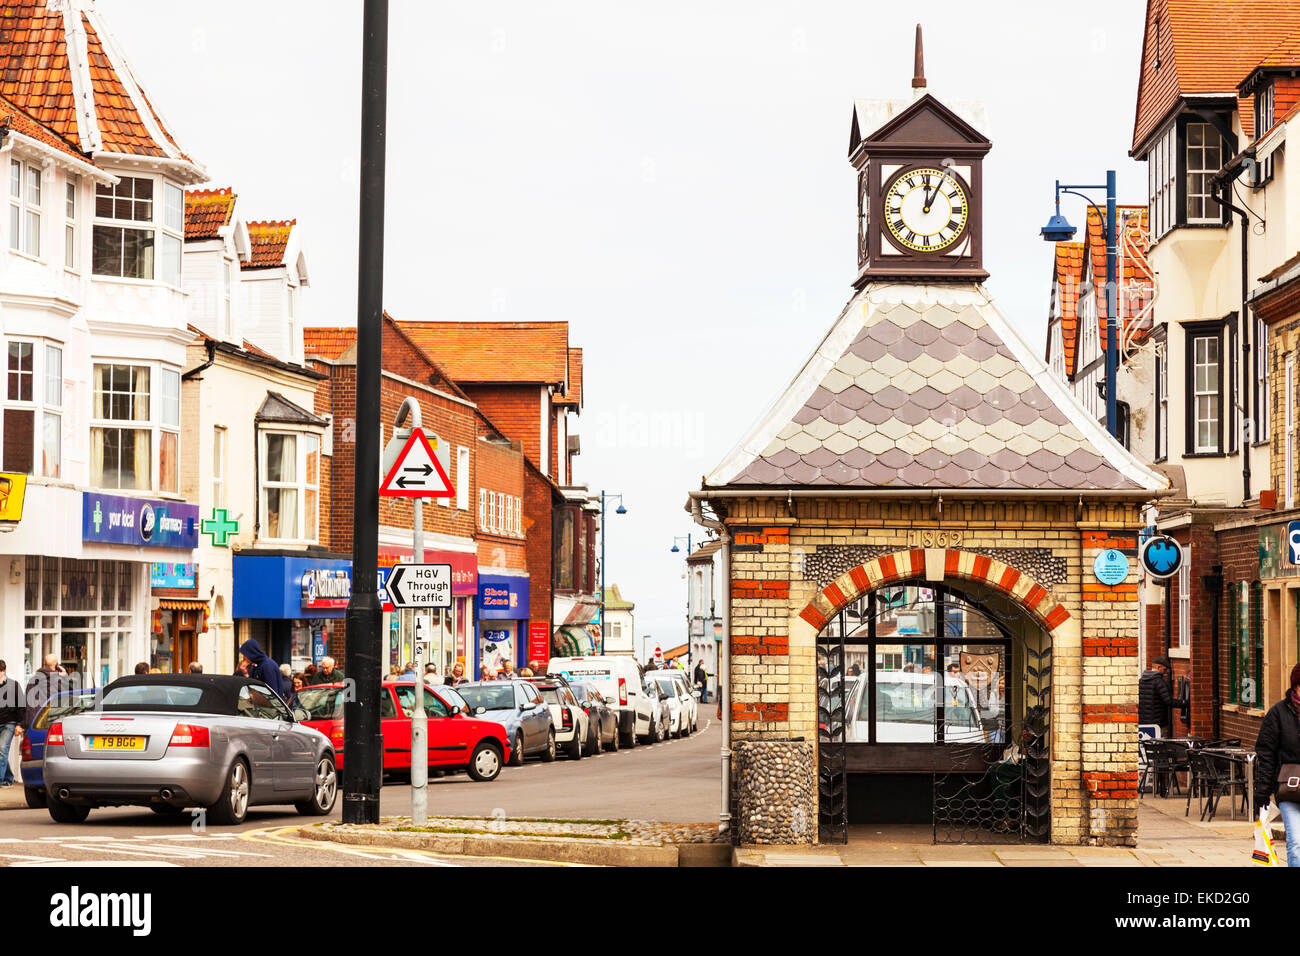 Sheringham centro città Norwich clock tower shelter bus negozi shoppers turisti high street NORFOLK REGNO UNITO Inghilterra Foto Stock